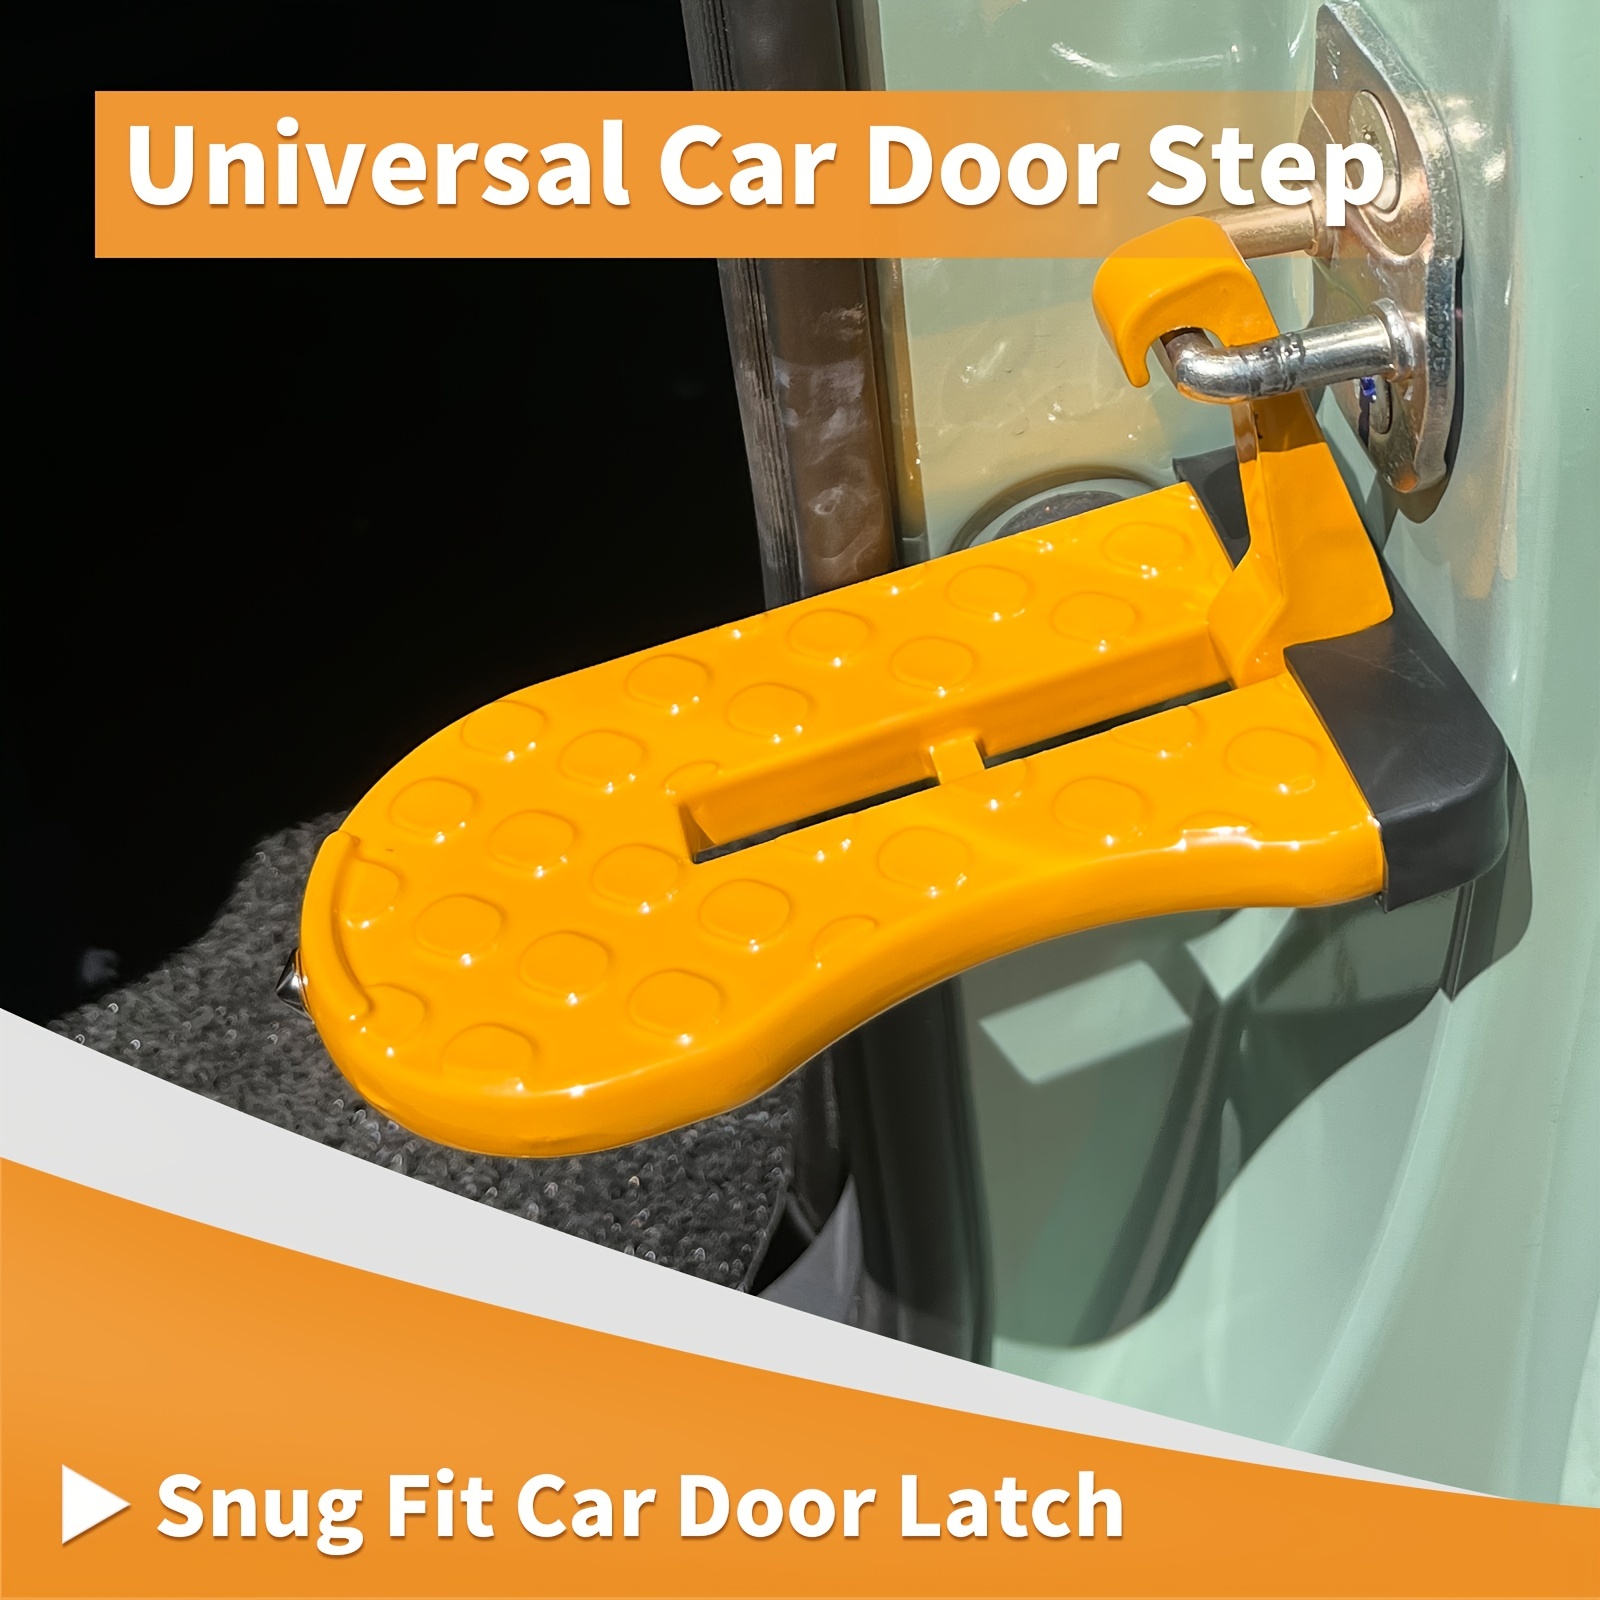 Universal Car Roof Rack Step Foldable Car Door Foot Step Pegs Gadgets Holder